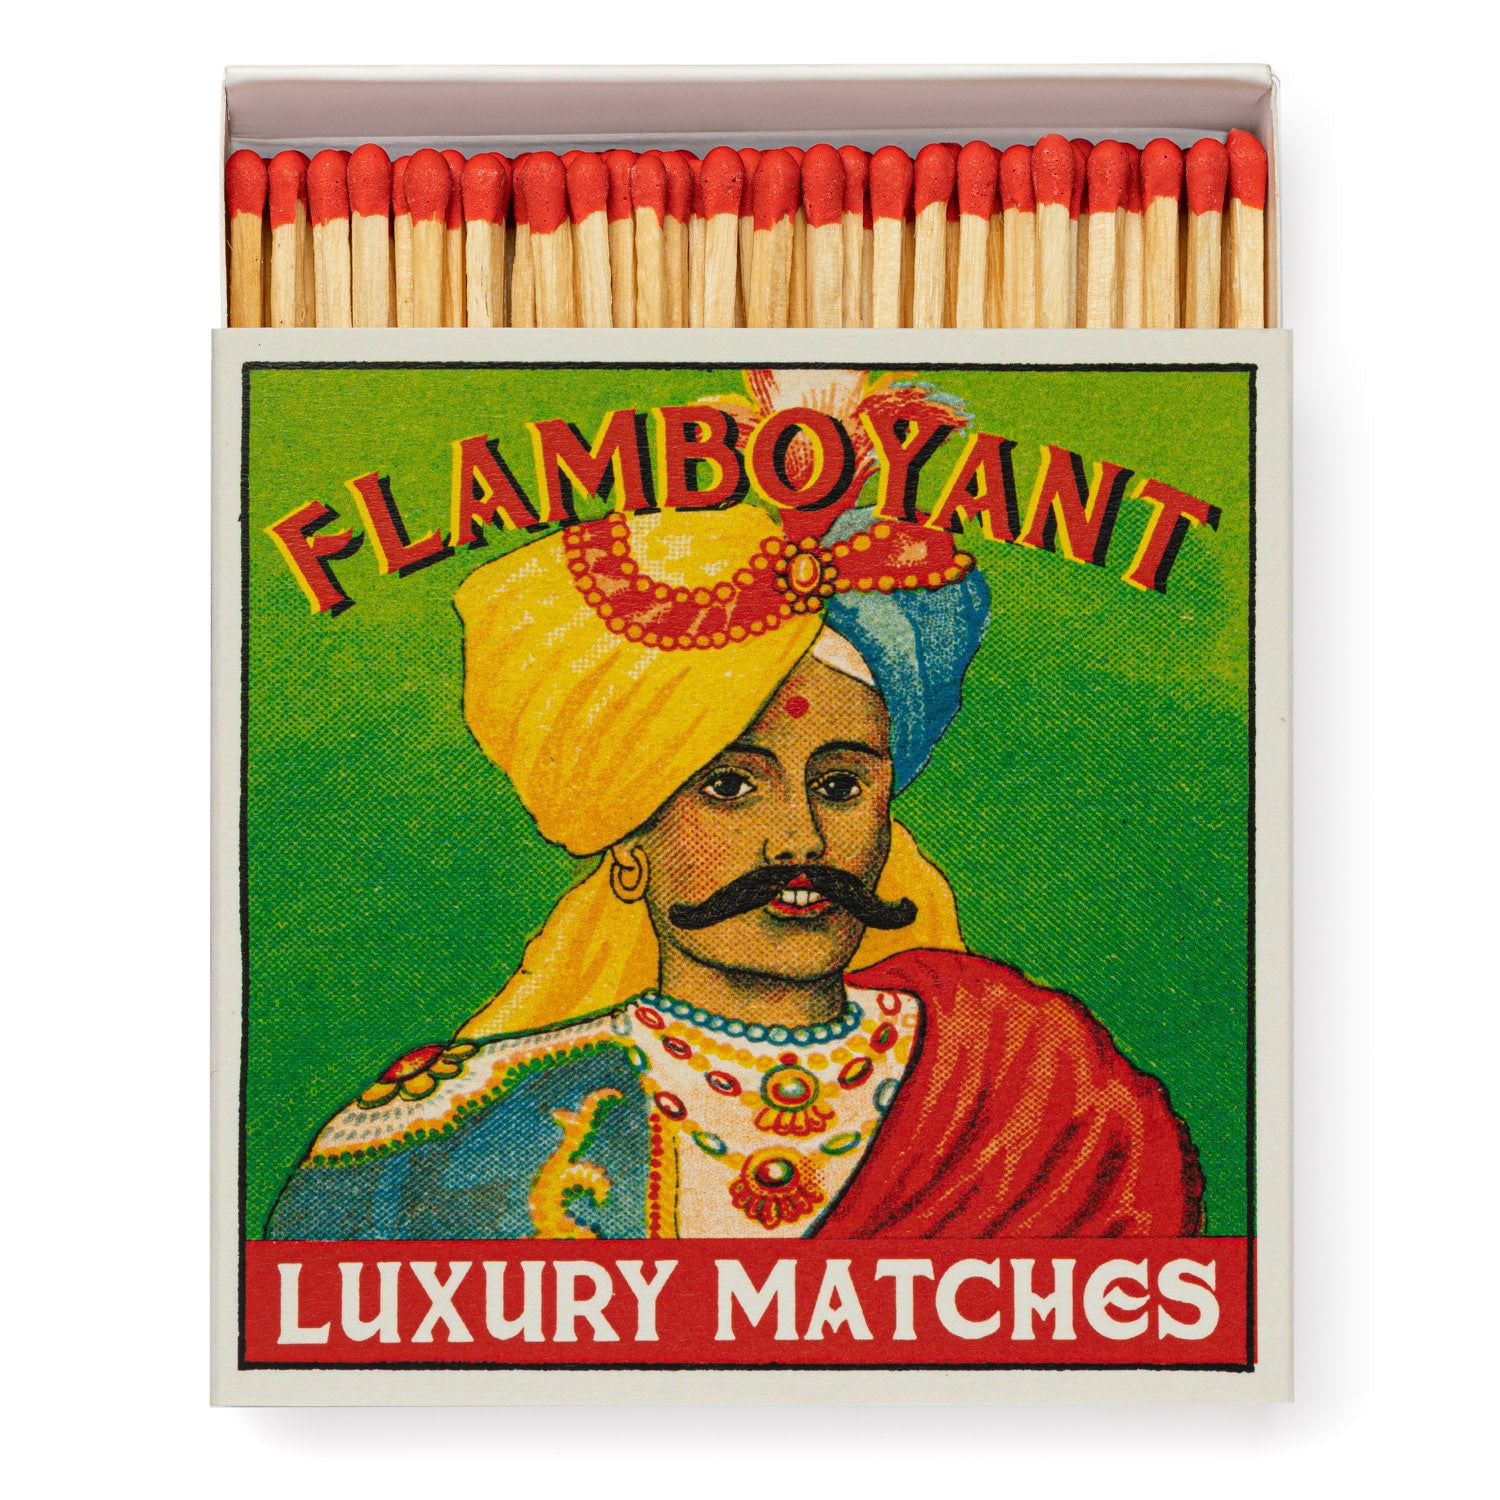 The Flamboyant Luxury Matches – 100 Stick Matches